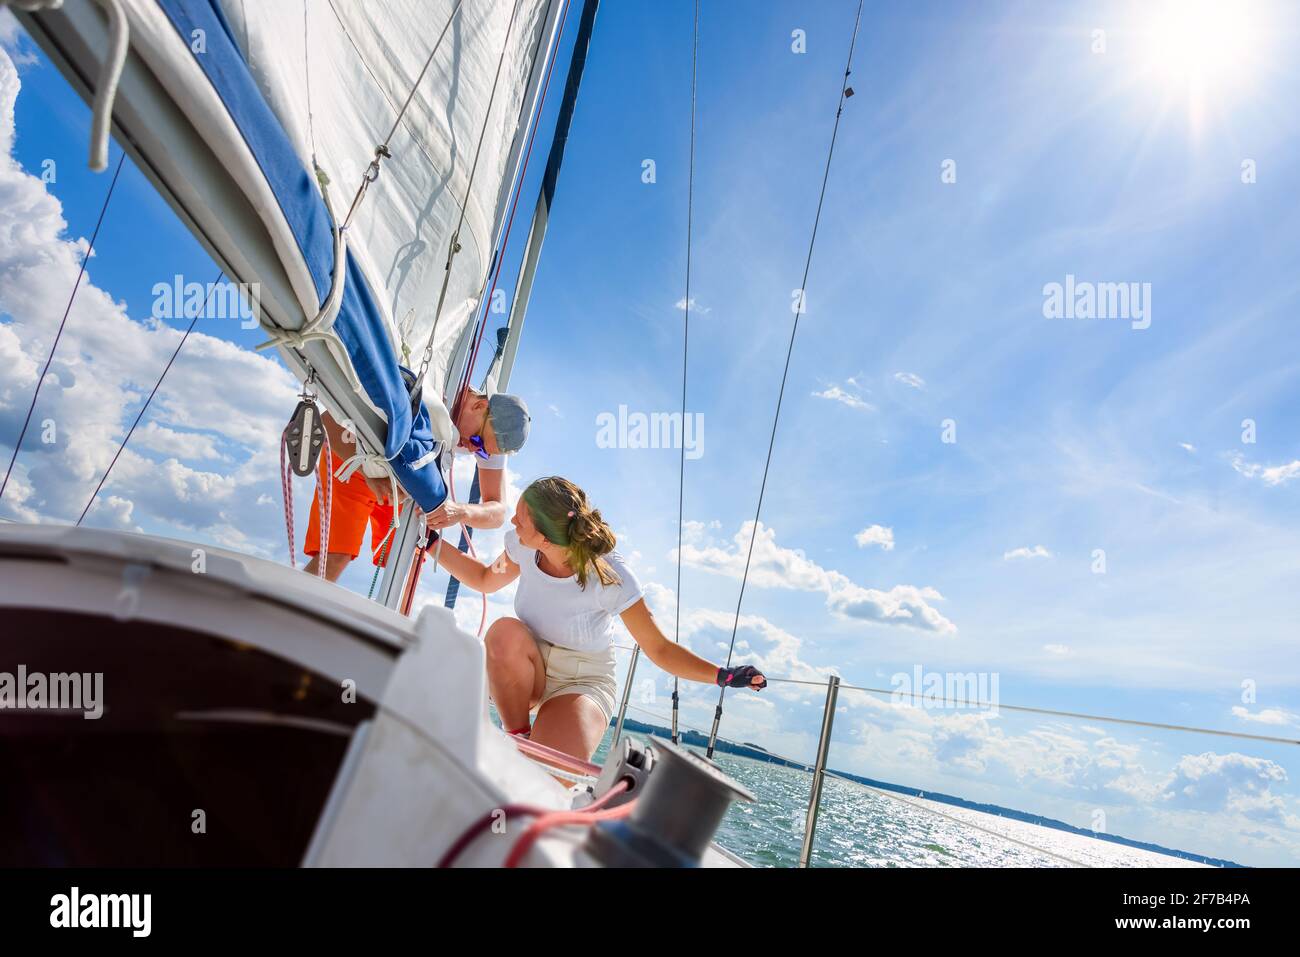 Young woman and man sailing on a yacht. Sailboat crewmember trimming main sail during sail on vacation in summer season Stock Photo